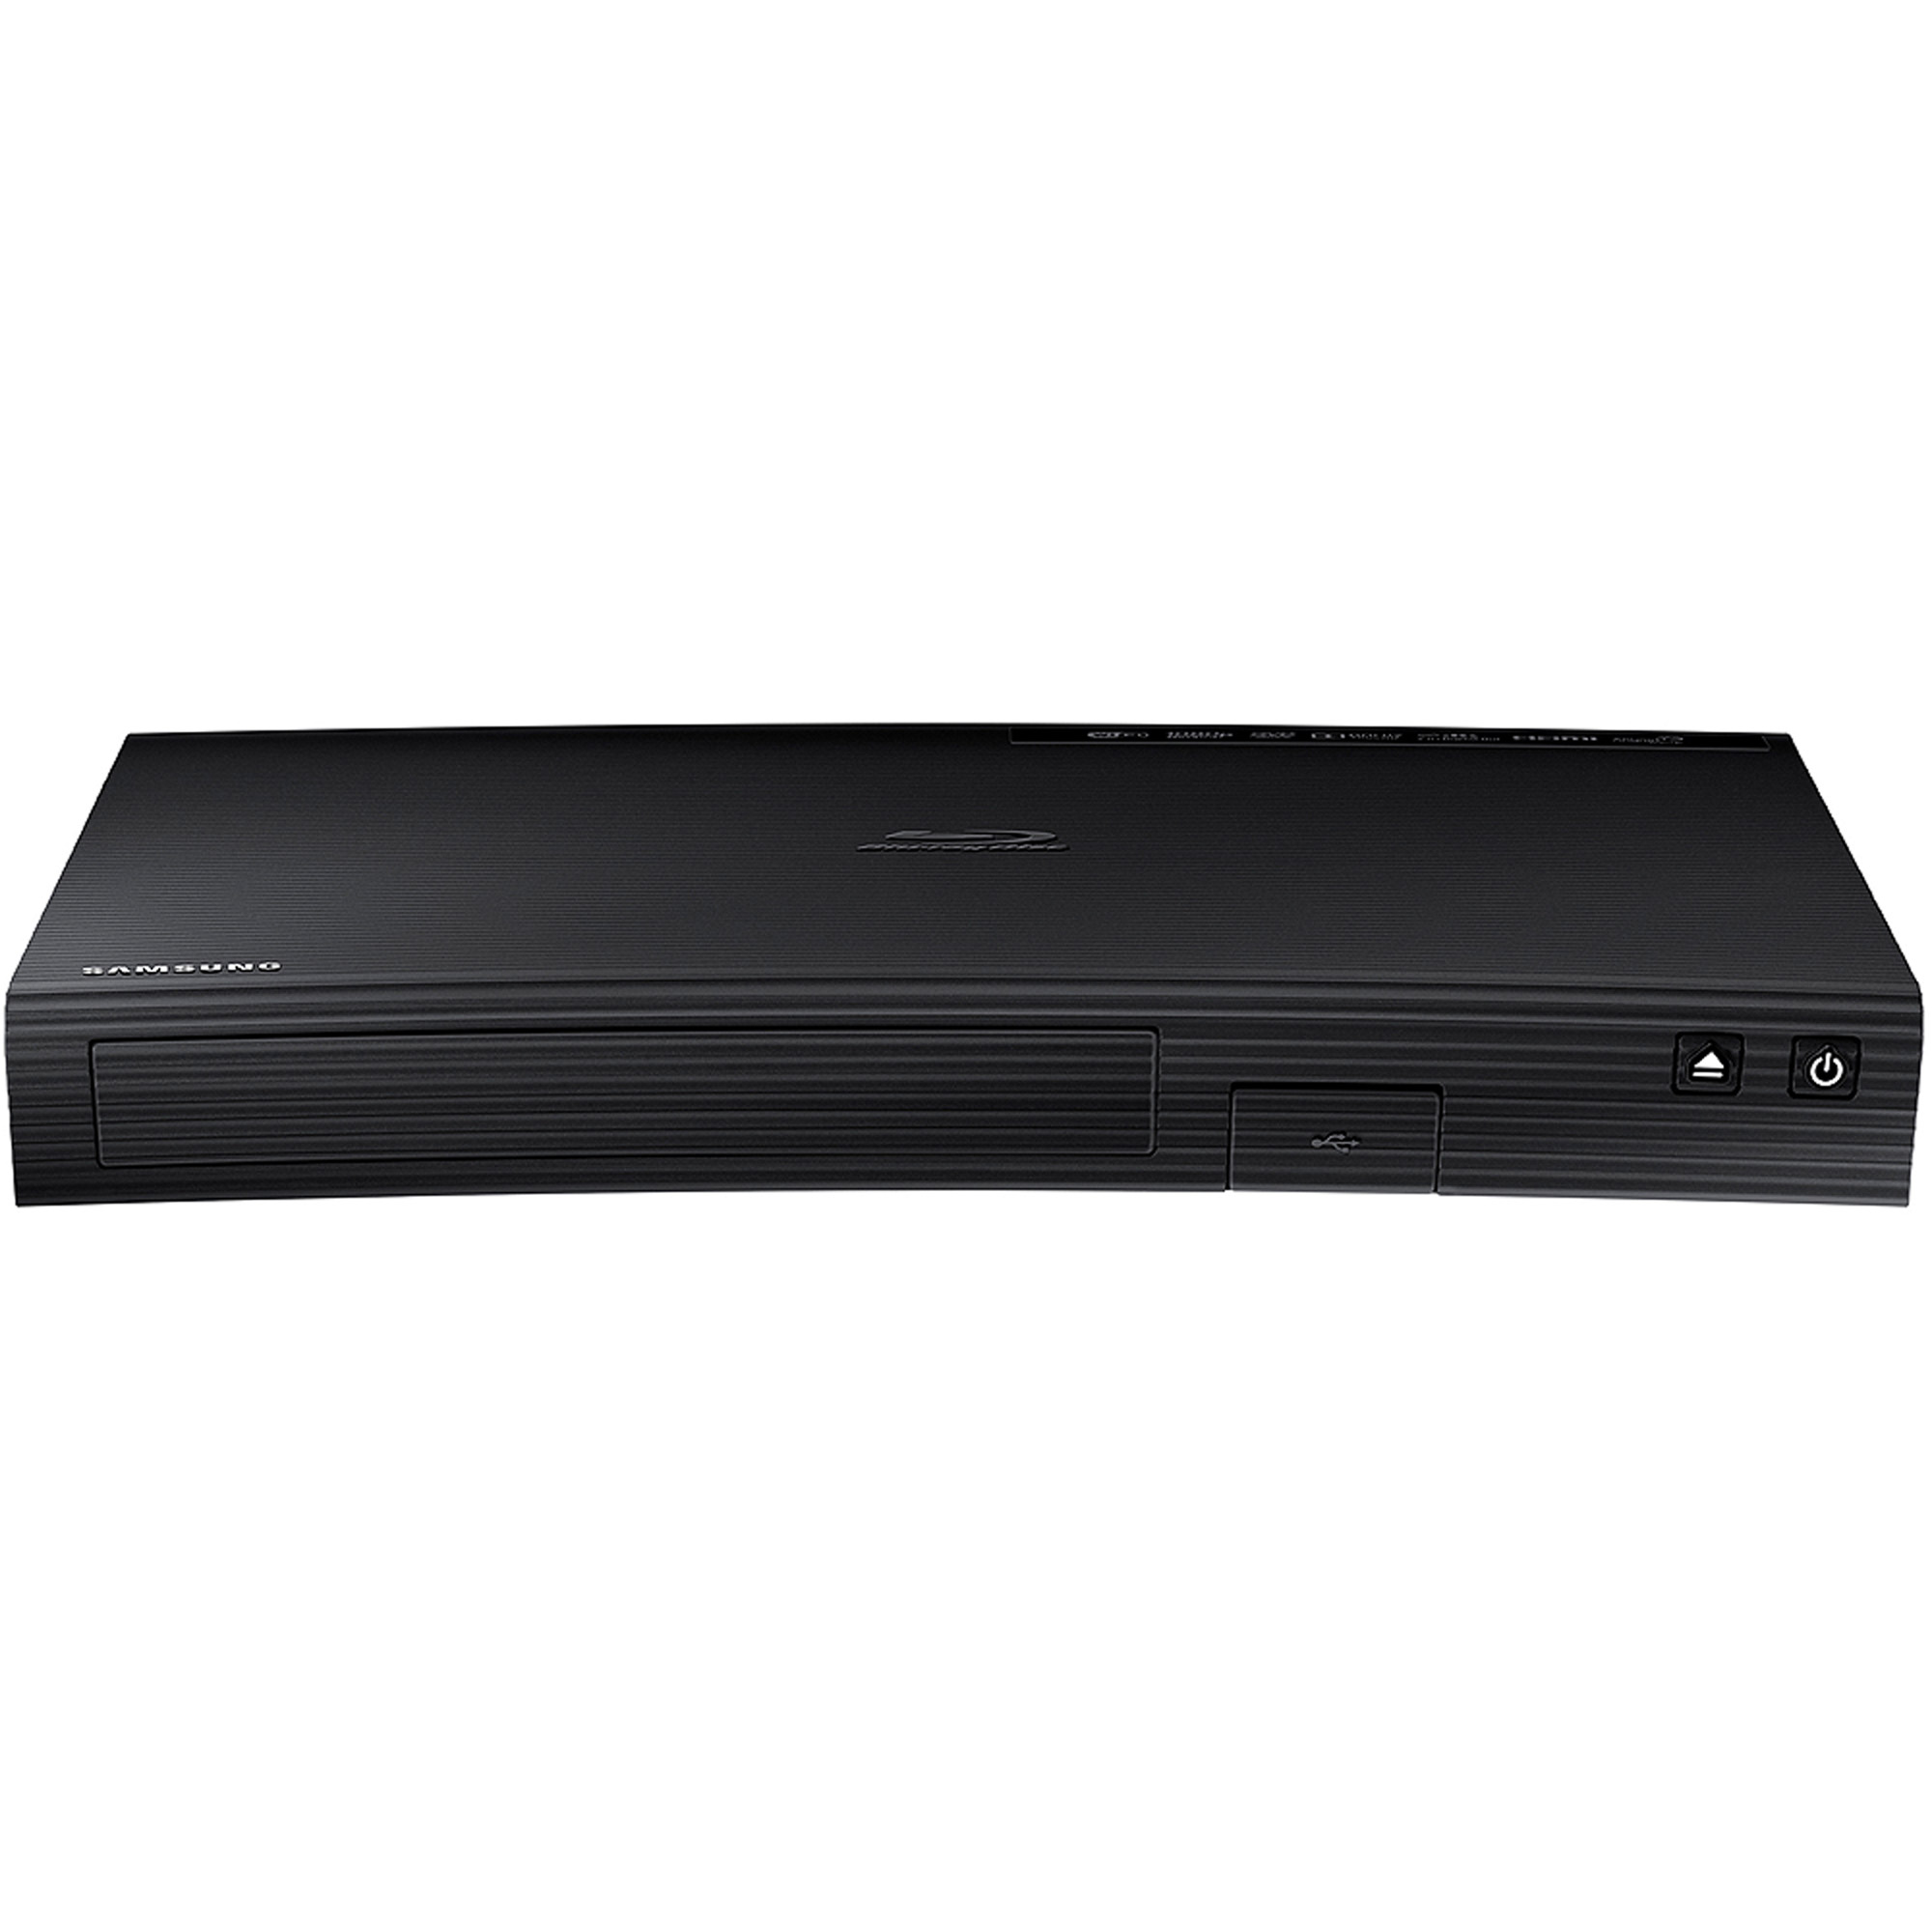 SAMSUNG Blu-ray & DVD Player with Wi-Fi Streaming - BD-J5700 ...